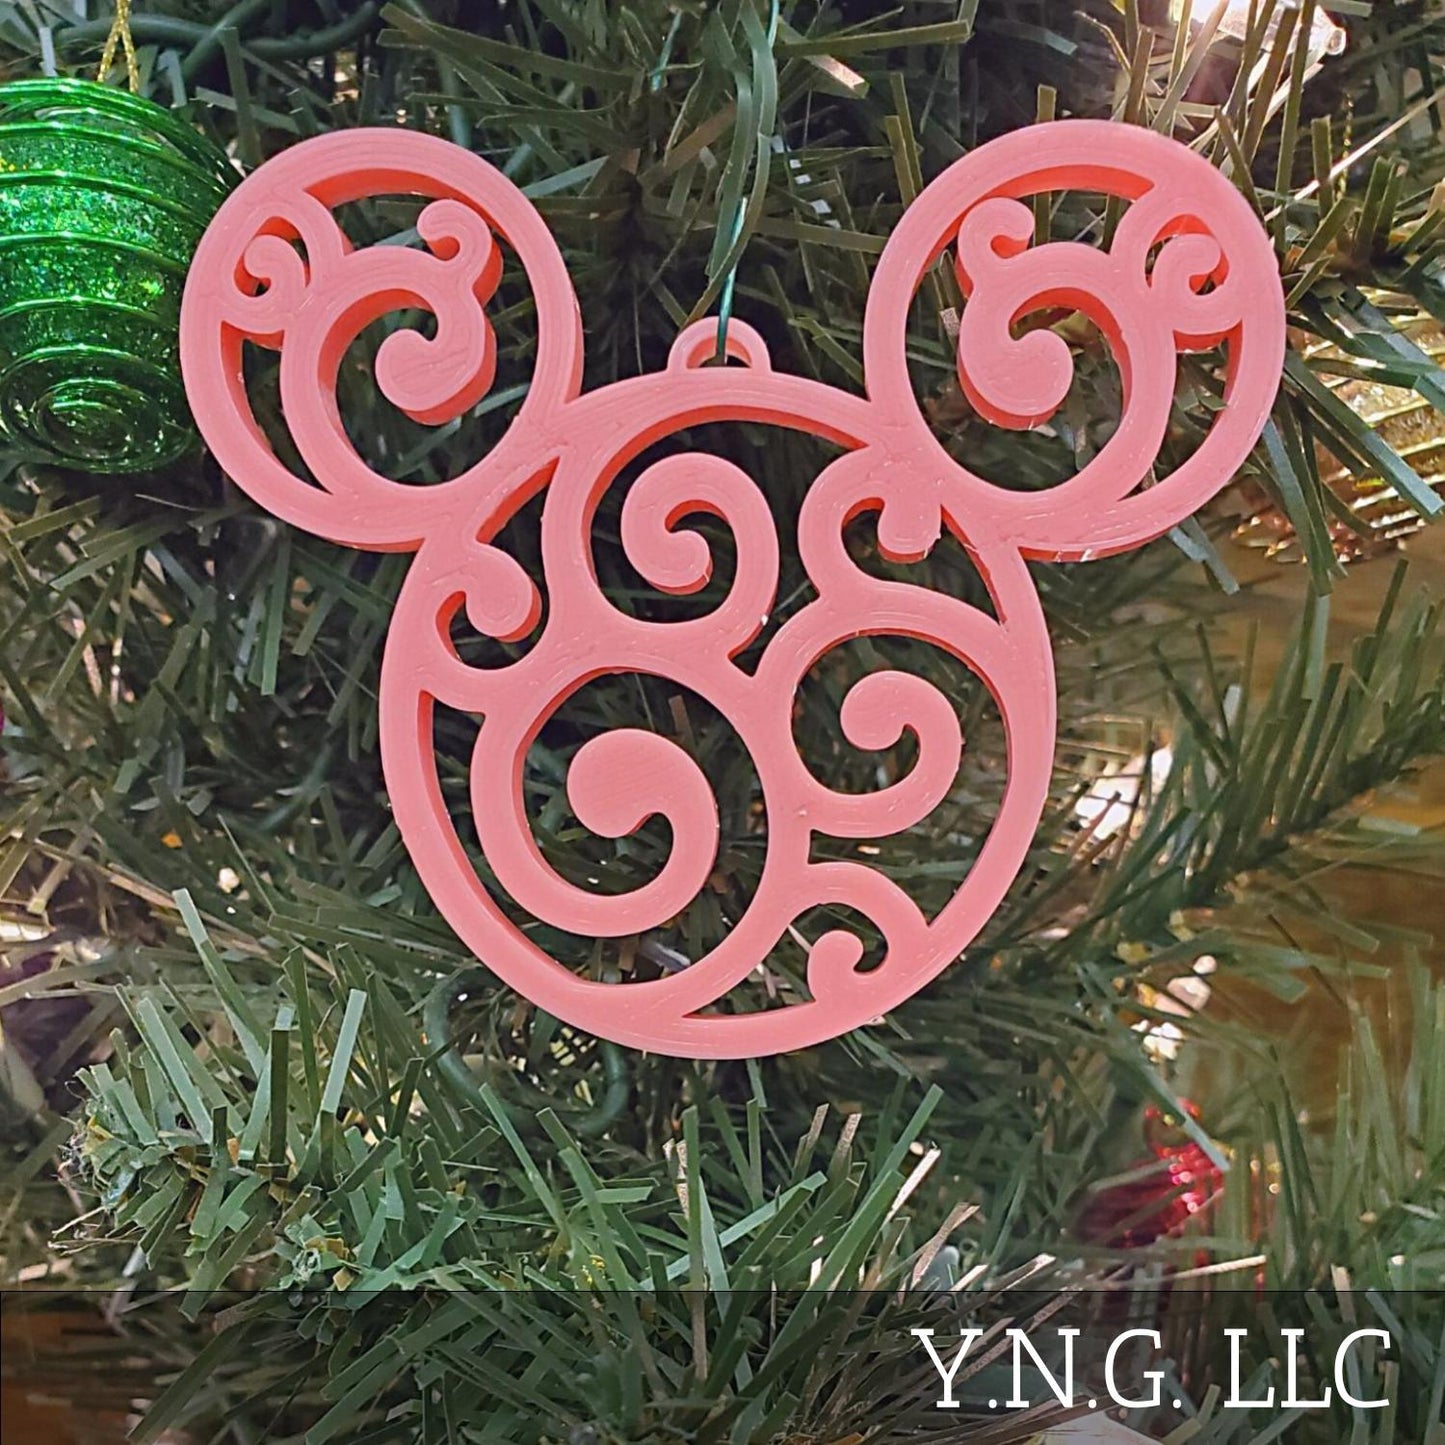 Mickey Mouse Head Ears Swirl Design Ornament Christmas Decor Made in USA PR2235